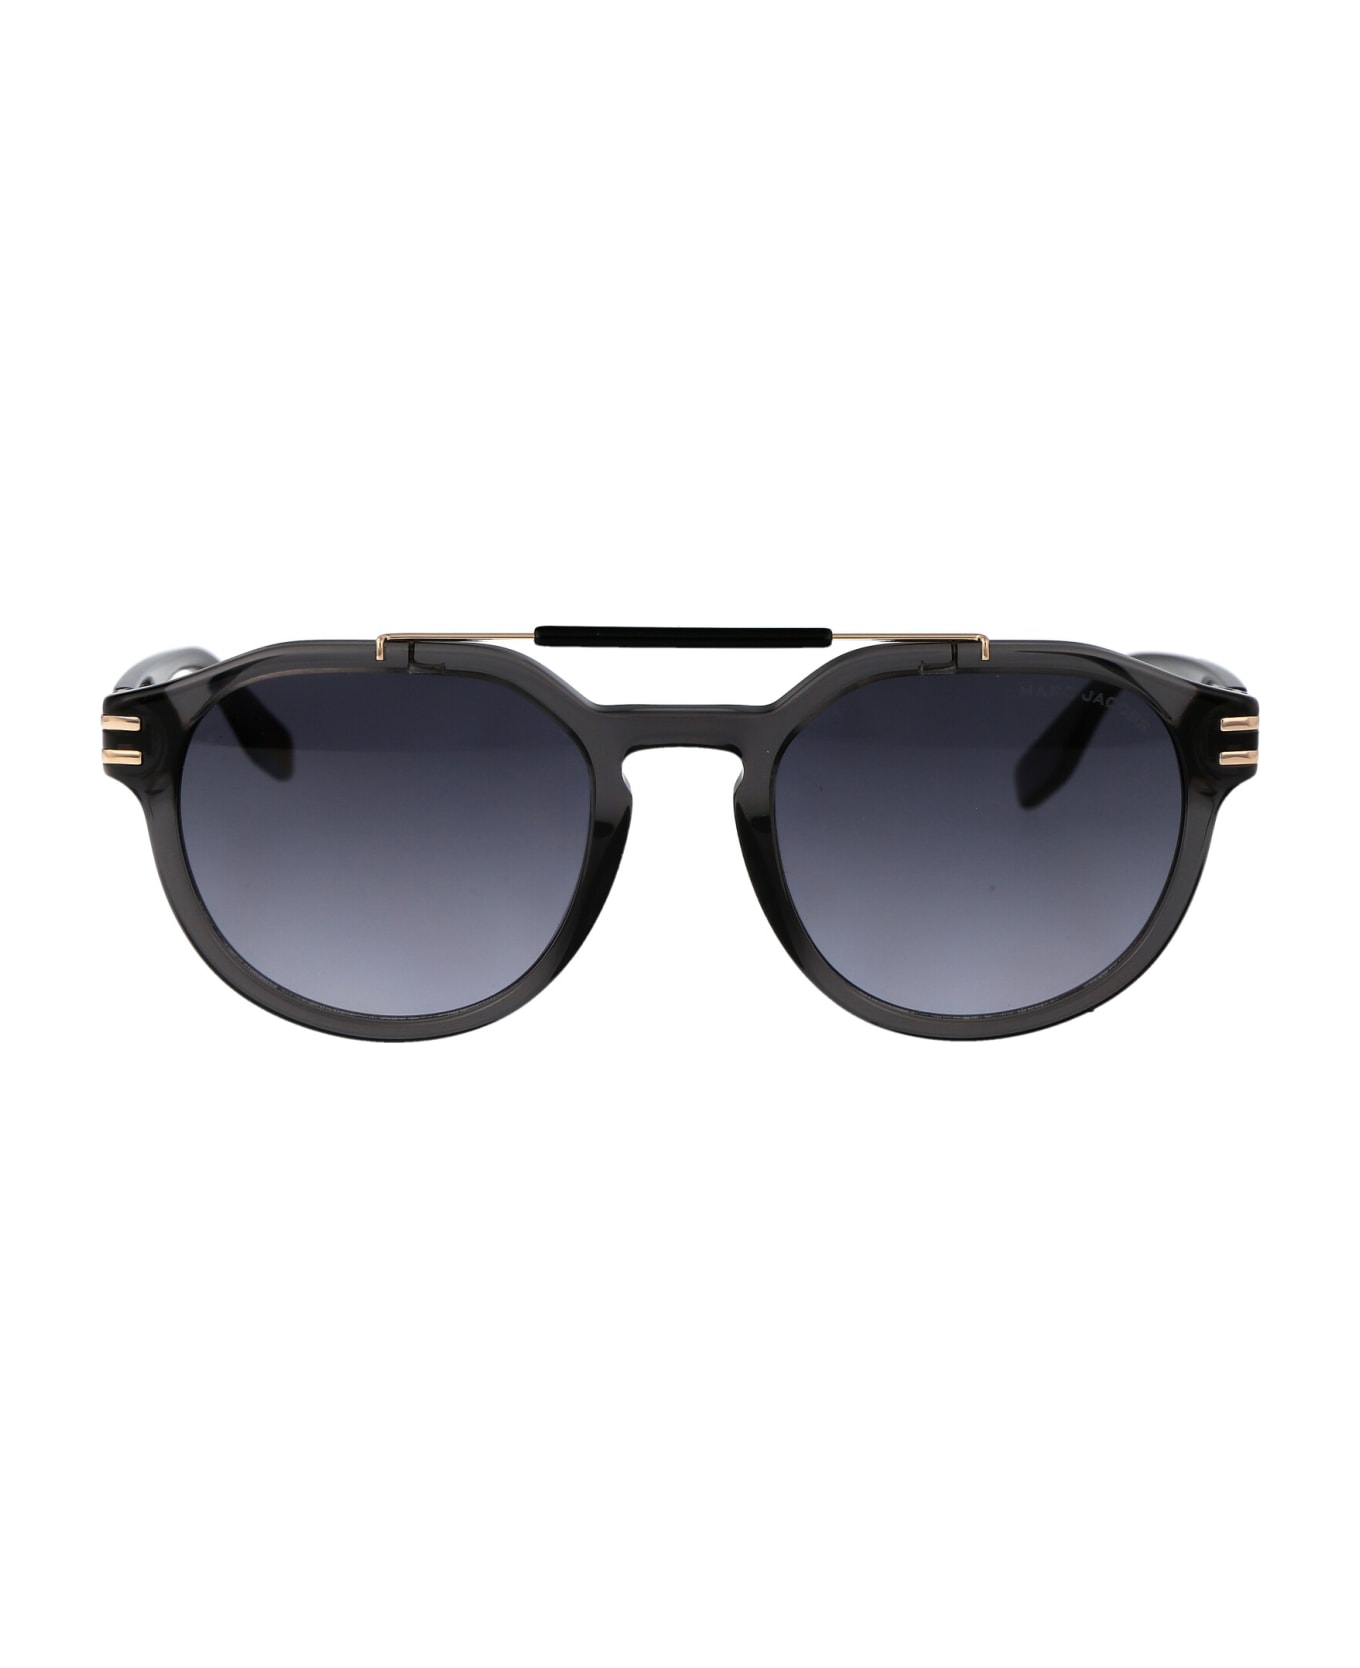 Marc Jacobs Eyewear Marc 675/s Sunglasses - FT39O GREY GOLD サングラス